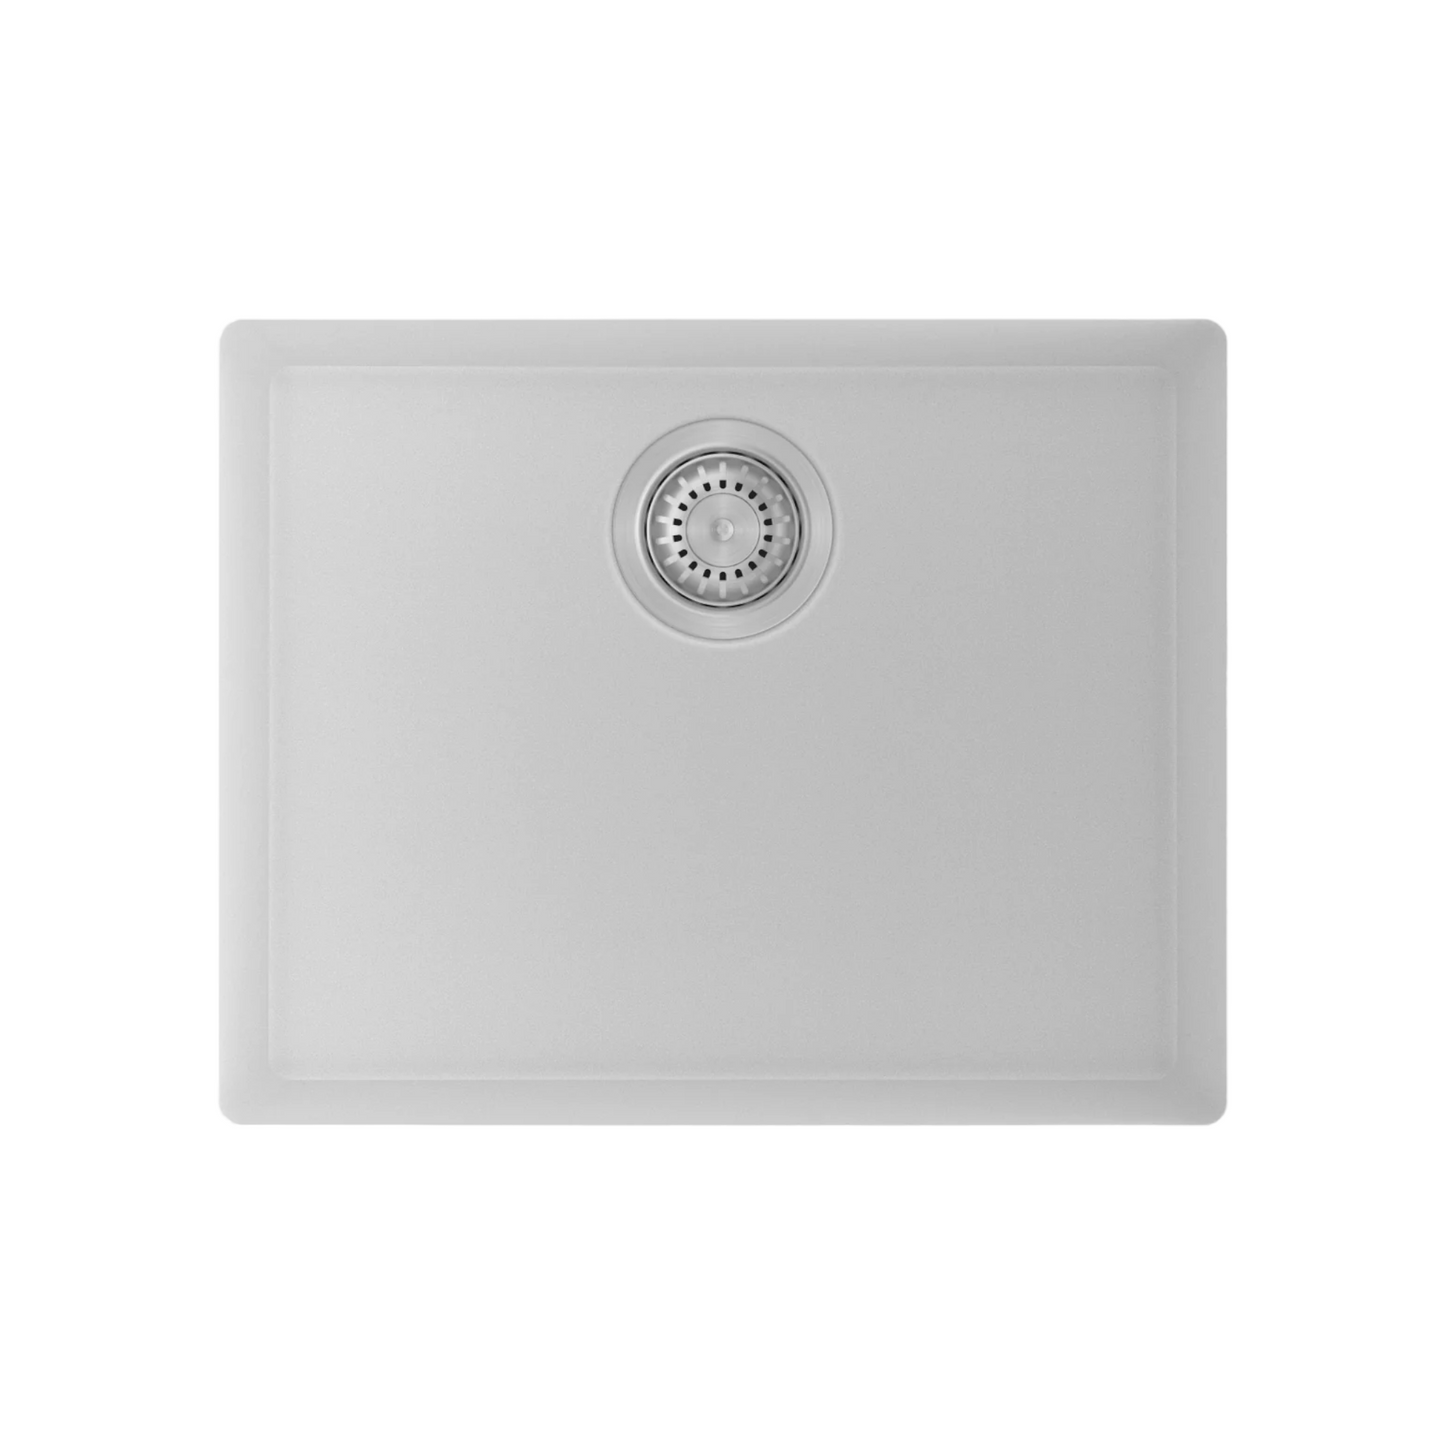 Carysil Granite Sink with Single Bowl 530x460 - White